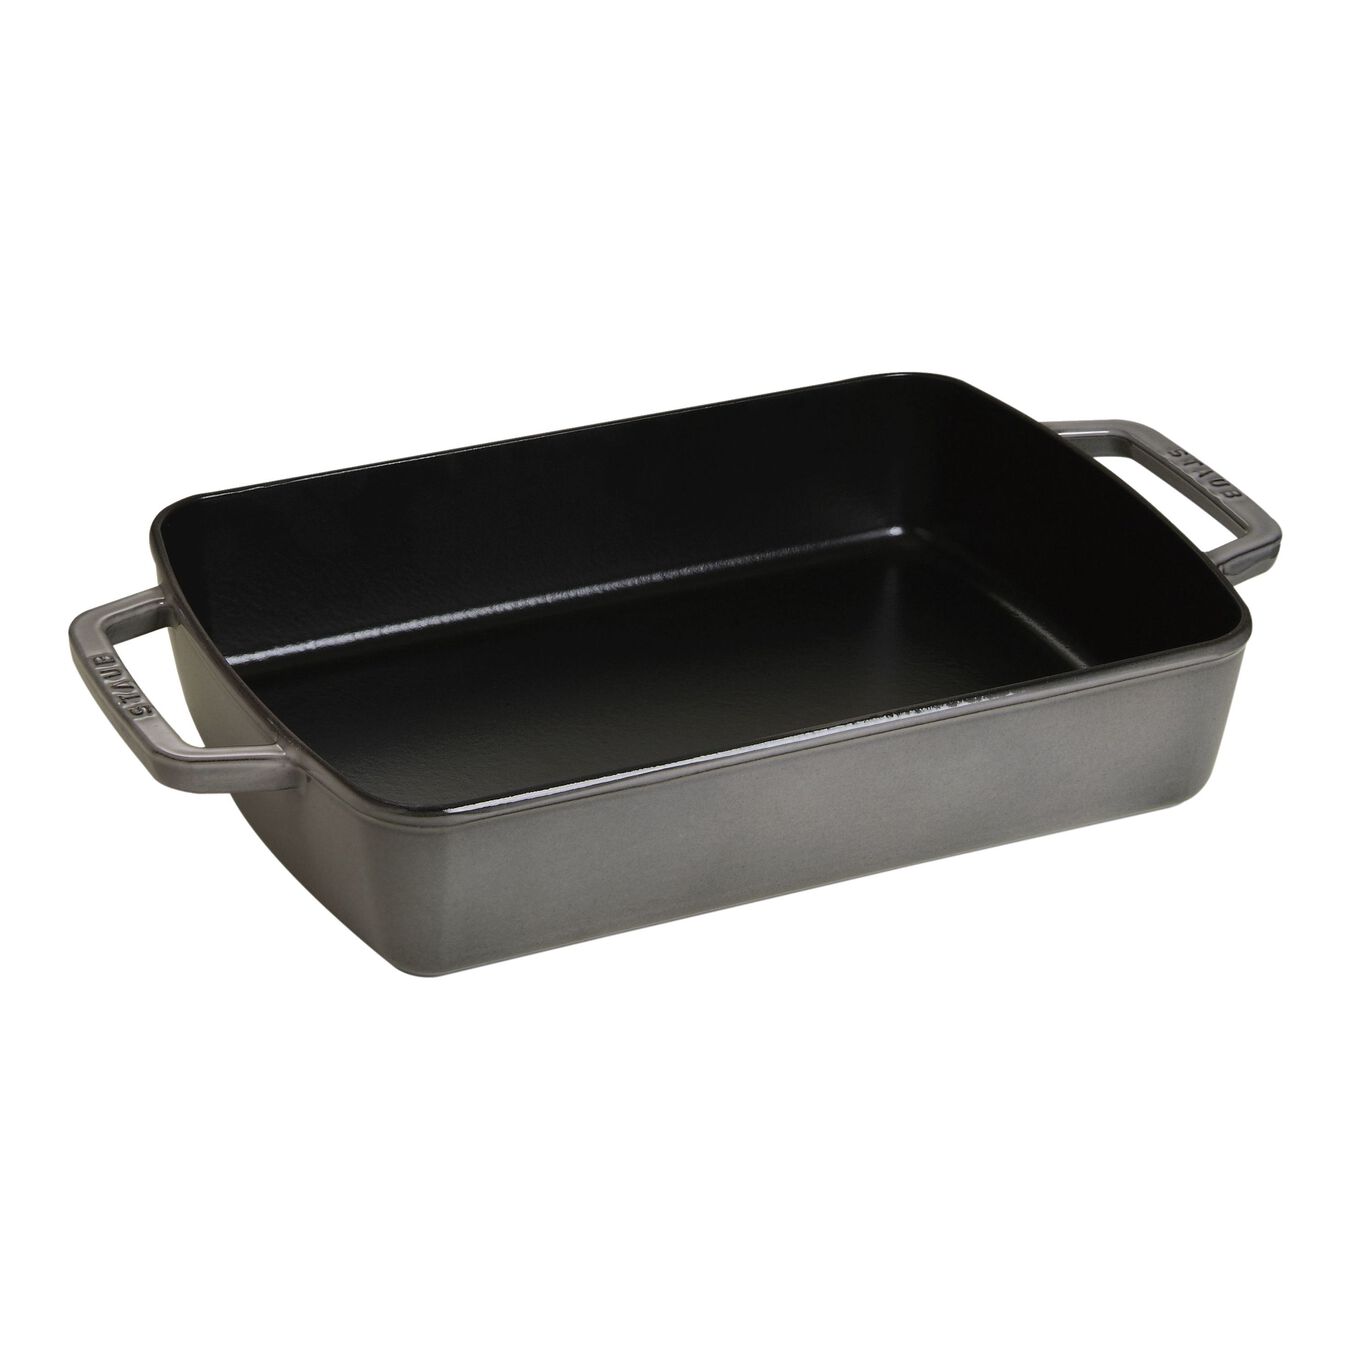 38 cm x 20 cm rectangular Cast iron Oven dish graphite-grey,,large 1